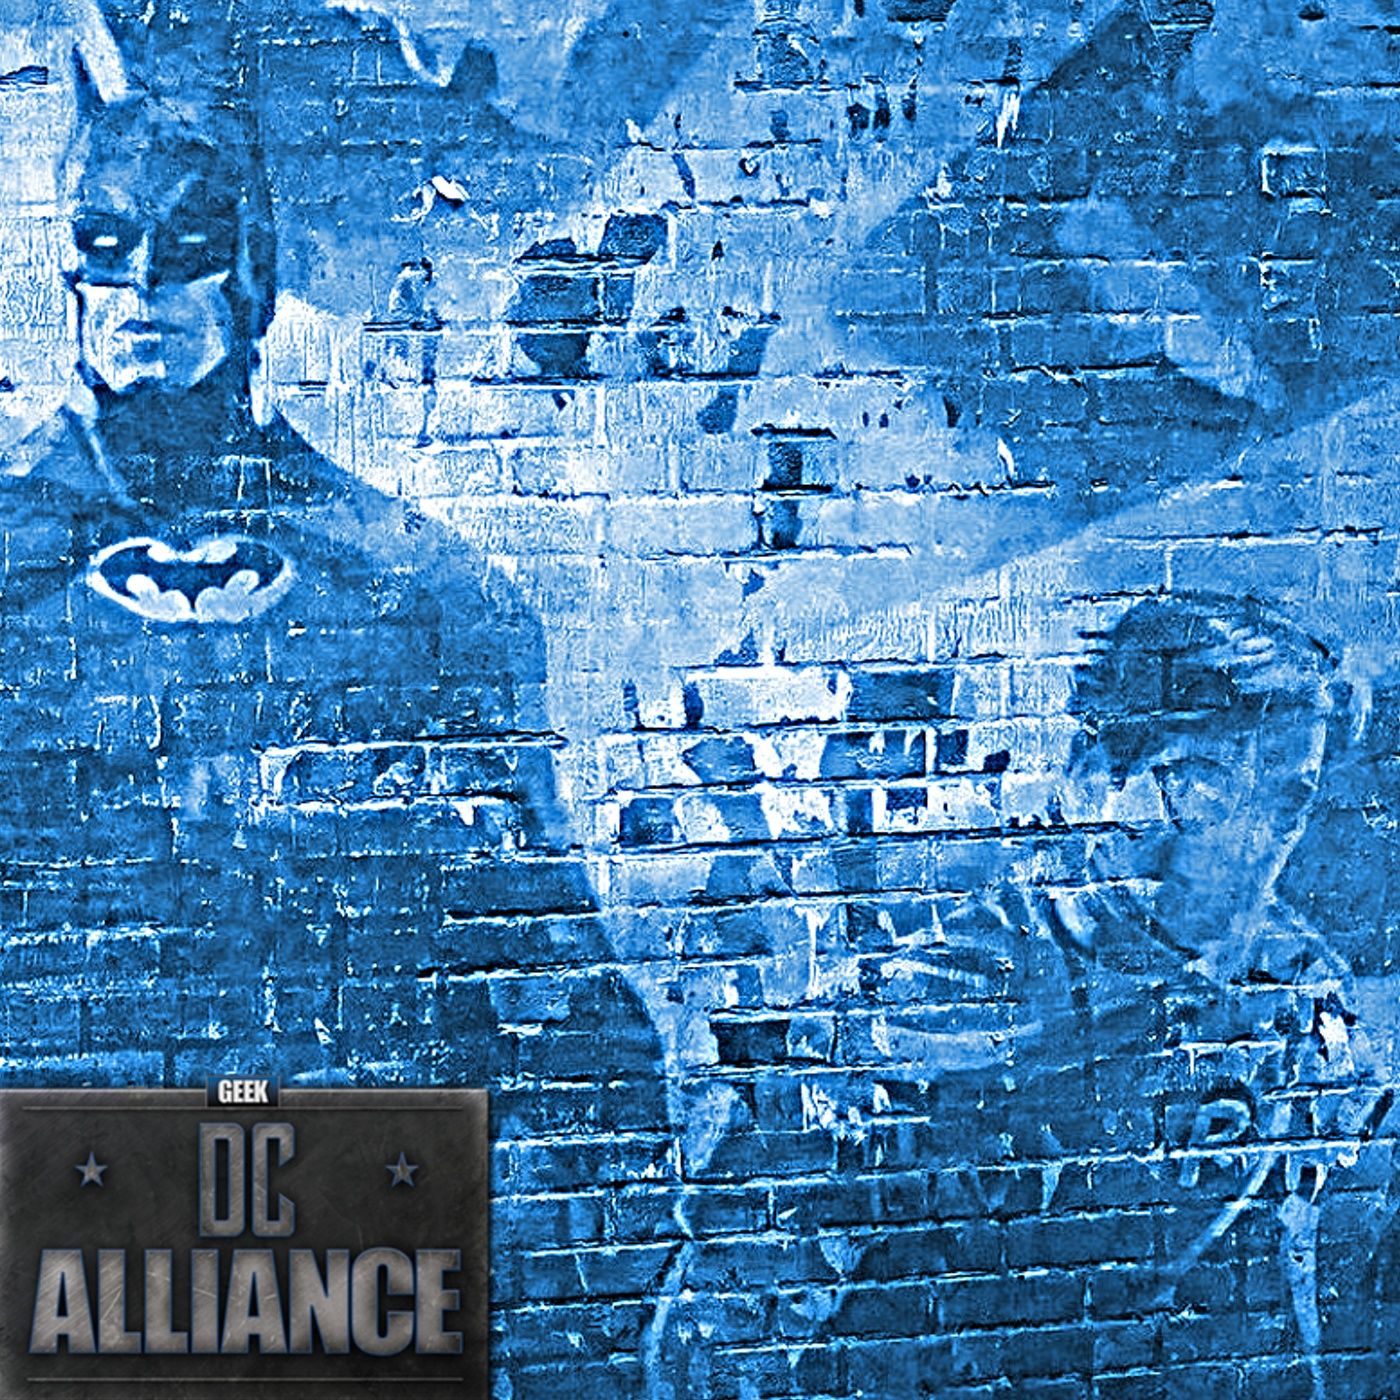 Batgirl Confirms Keaton's Batman Had A Robin: DC Alliance Ch. 86